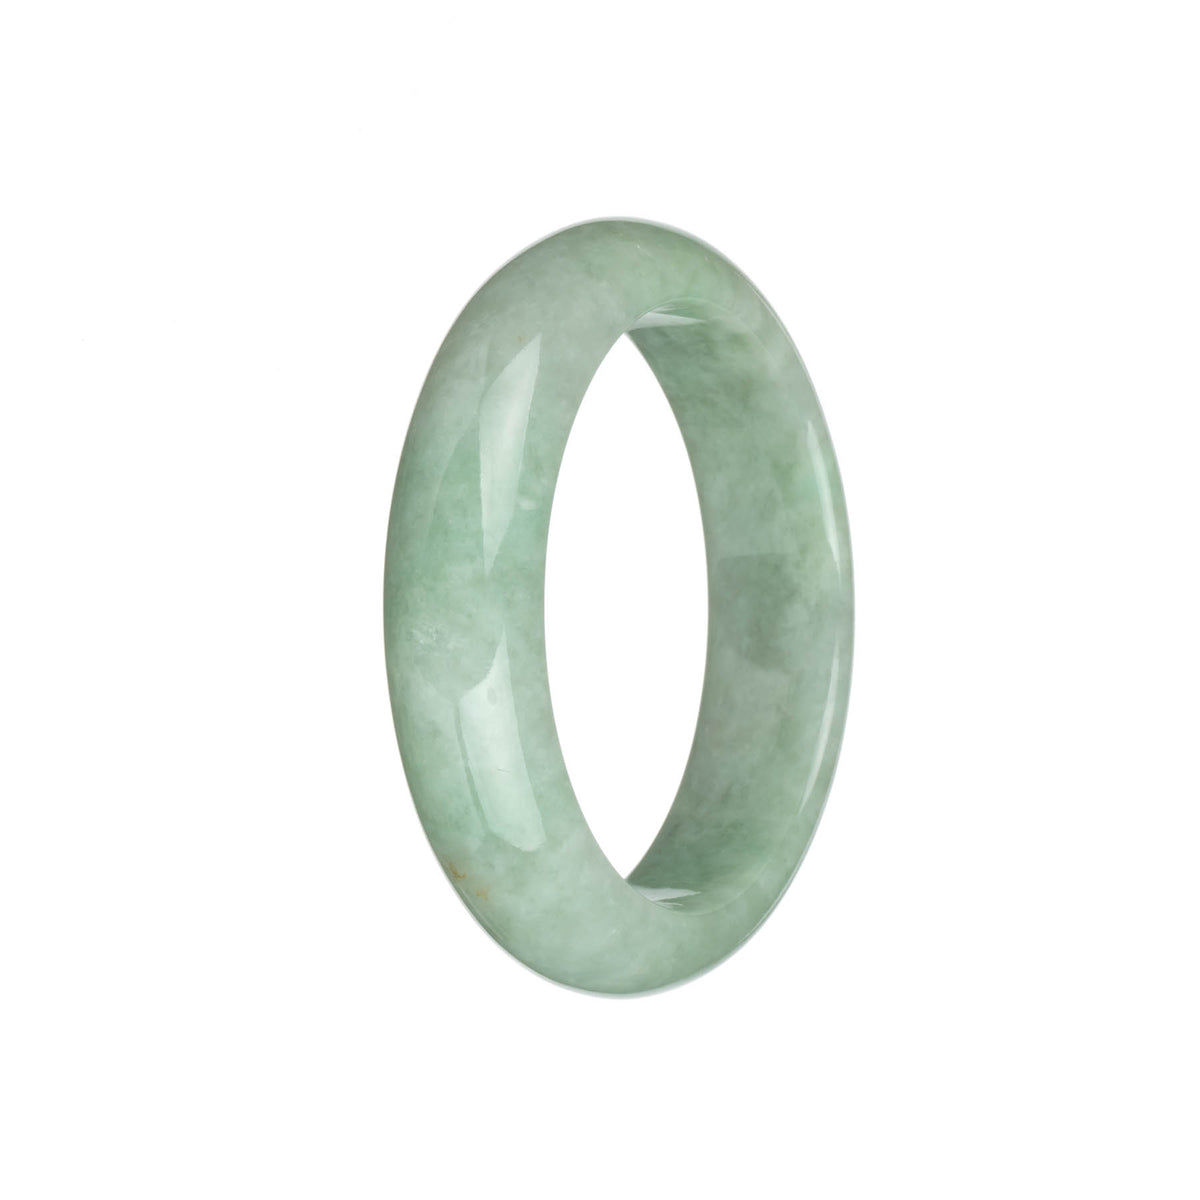 Certified Grade A Light Green Traditional Jade Bangle - 57mm Half Moon